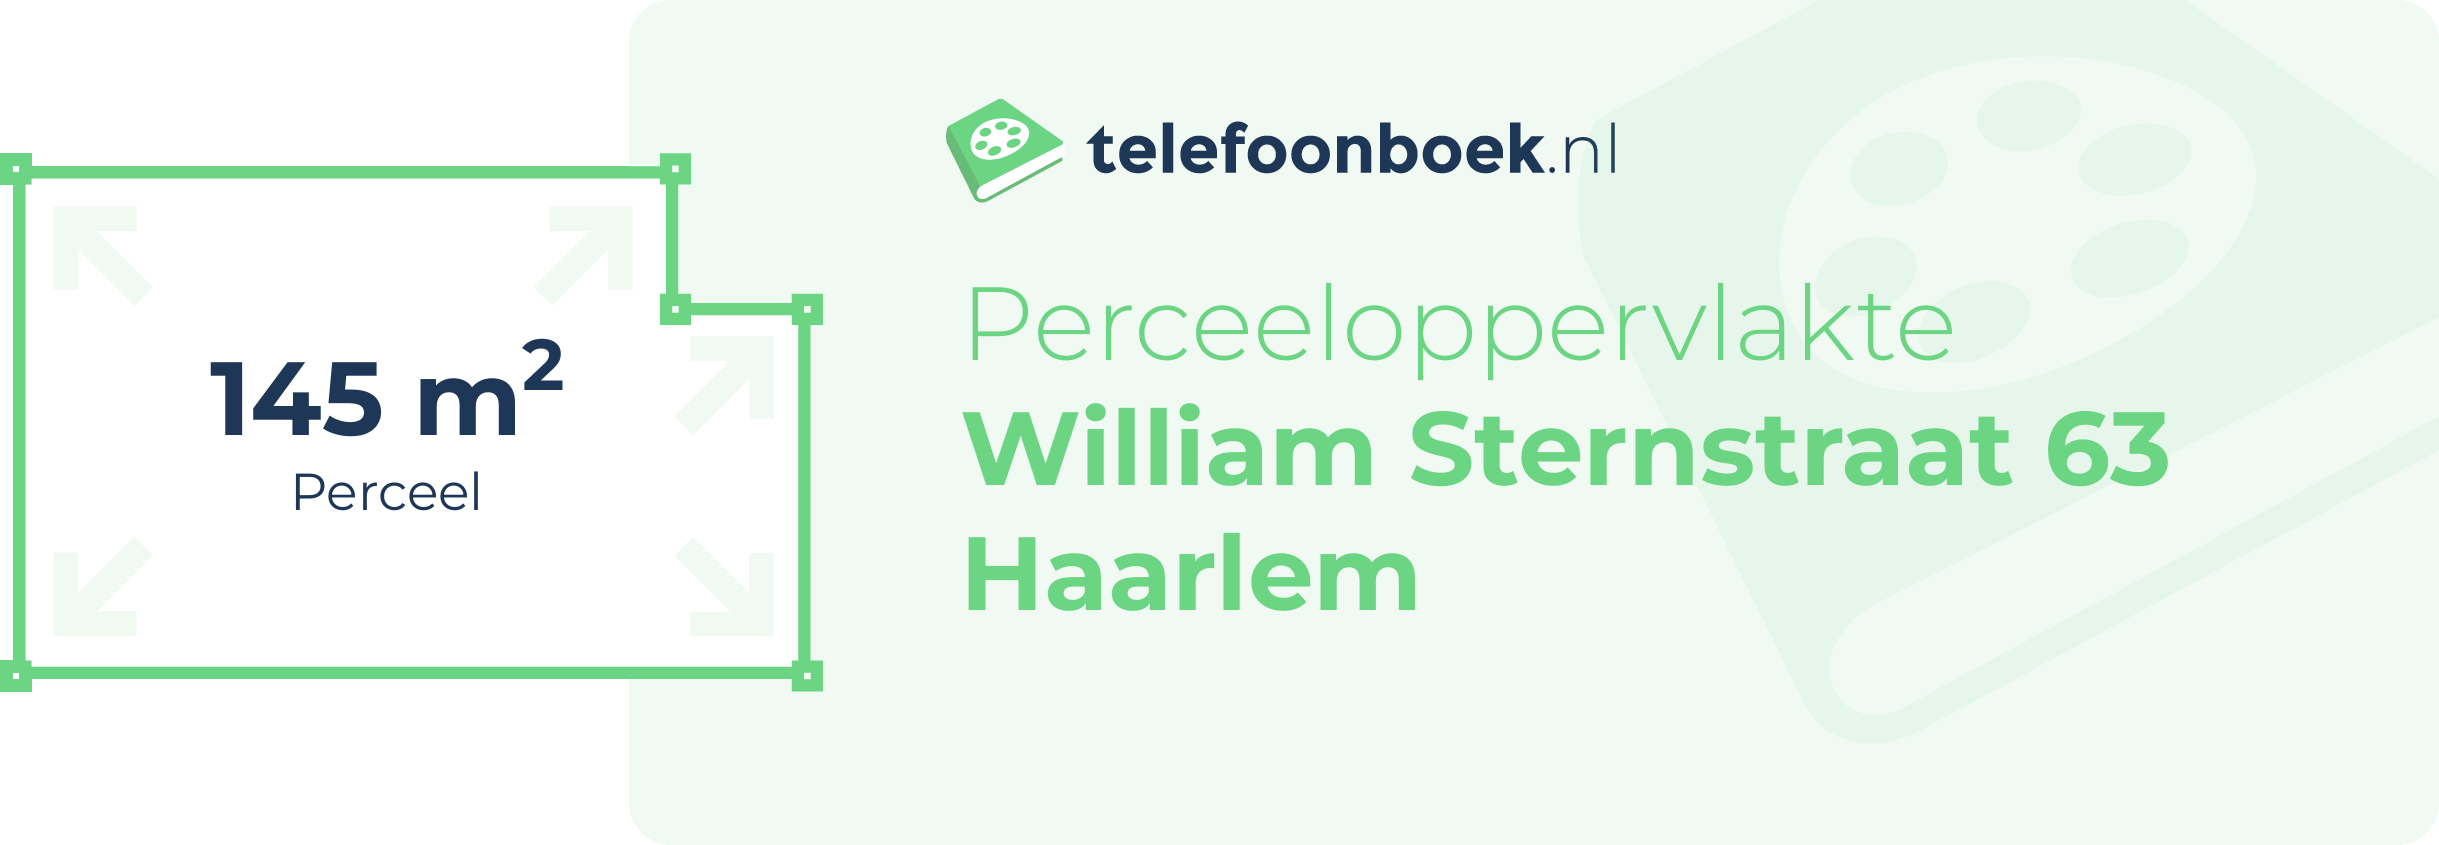 Perceeloppervlakte William Sternstraat 63 Haarlem